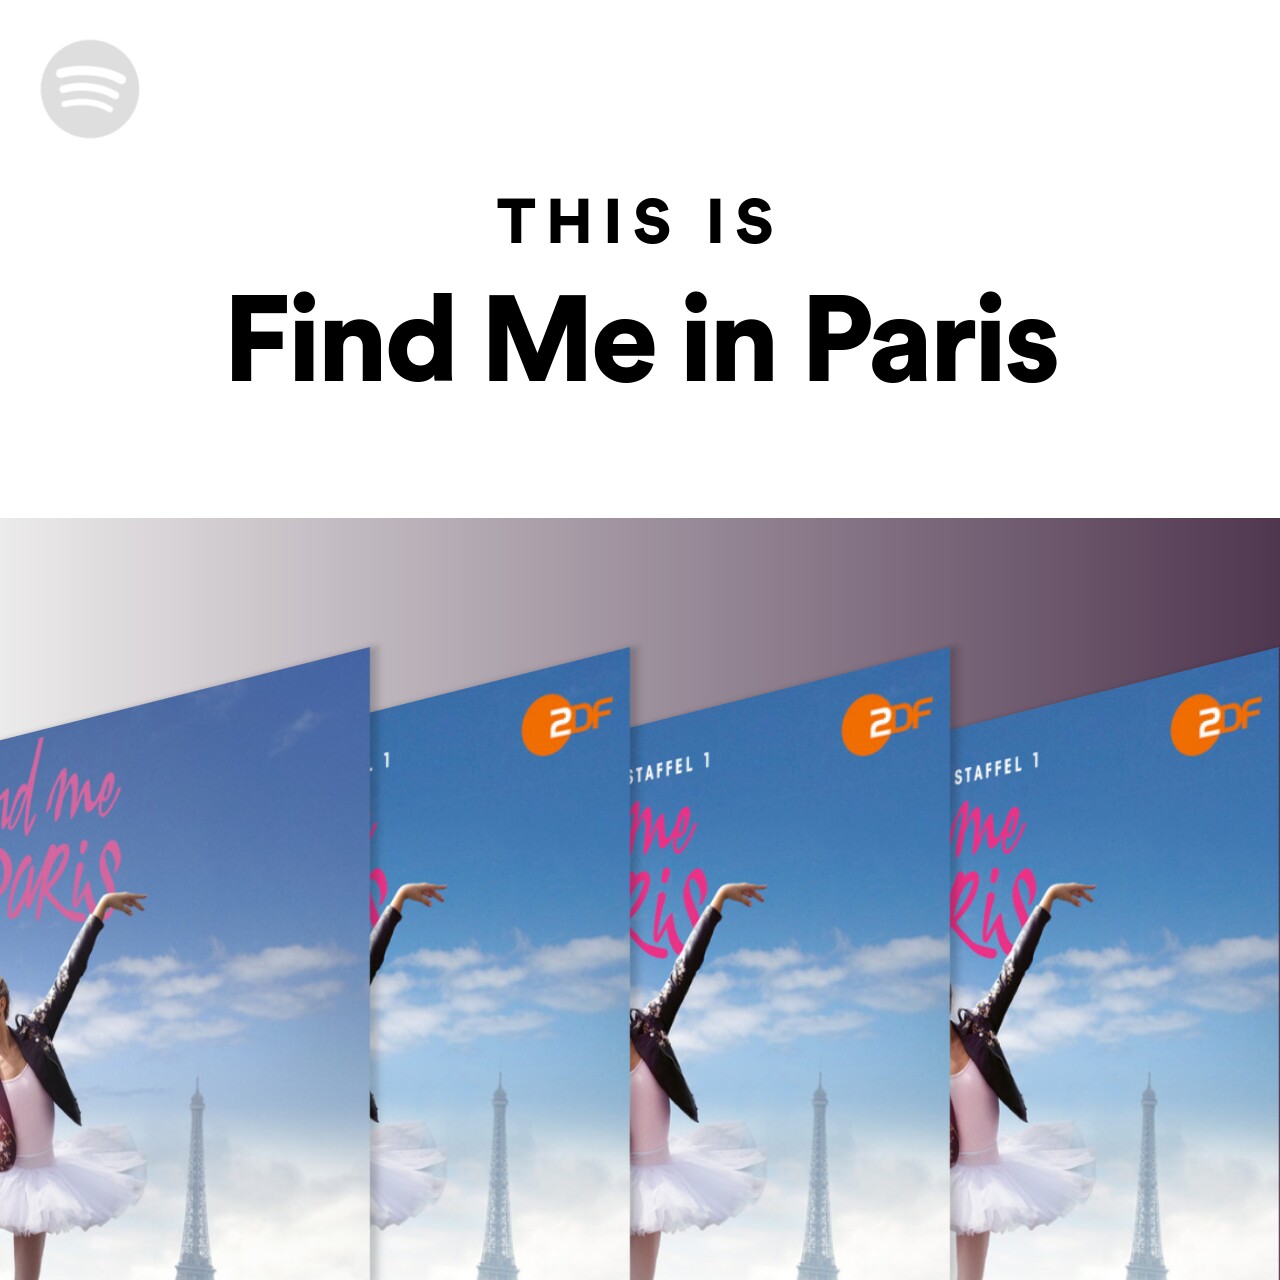 This Is Find Me in Paris